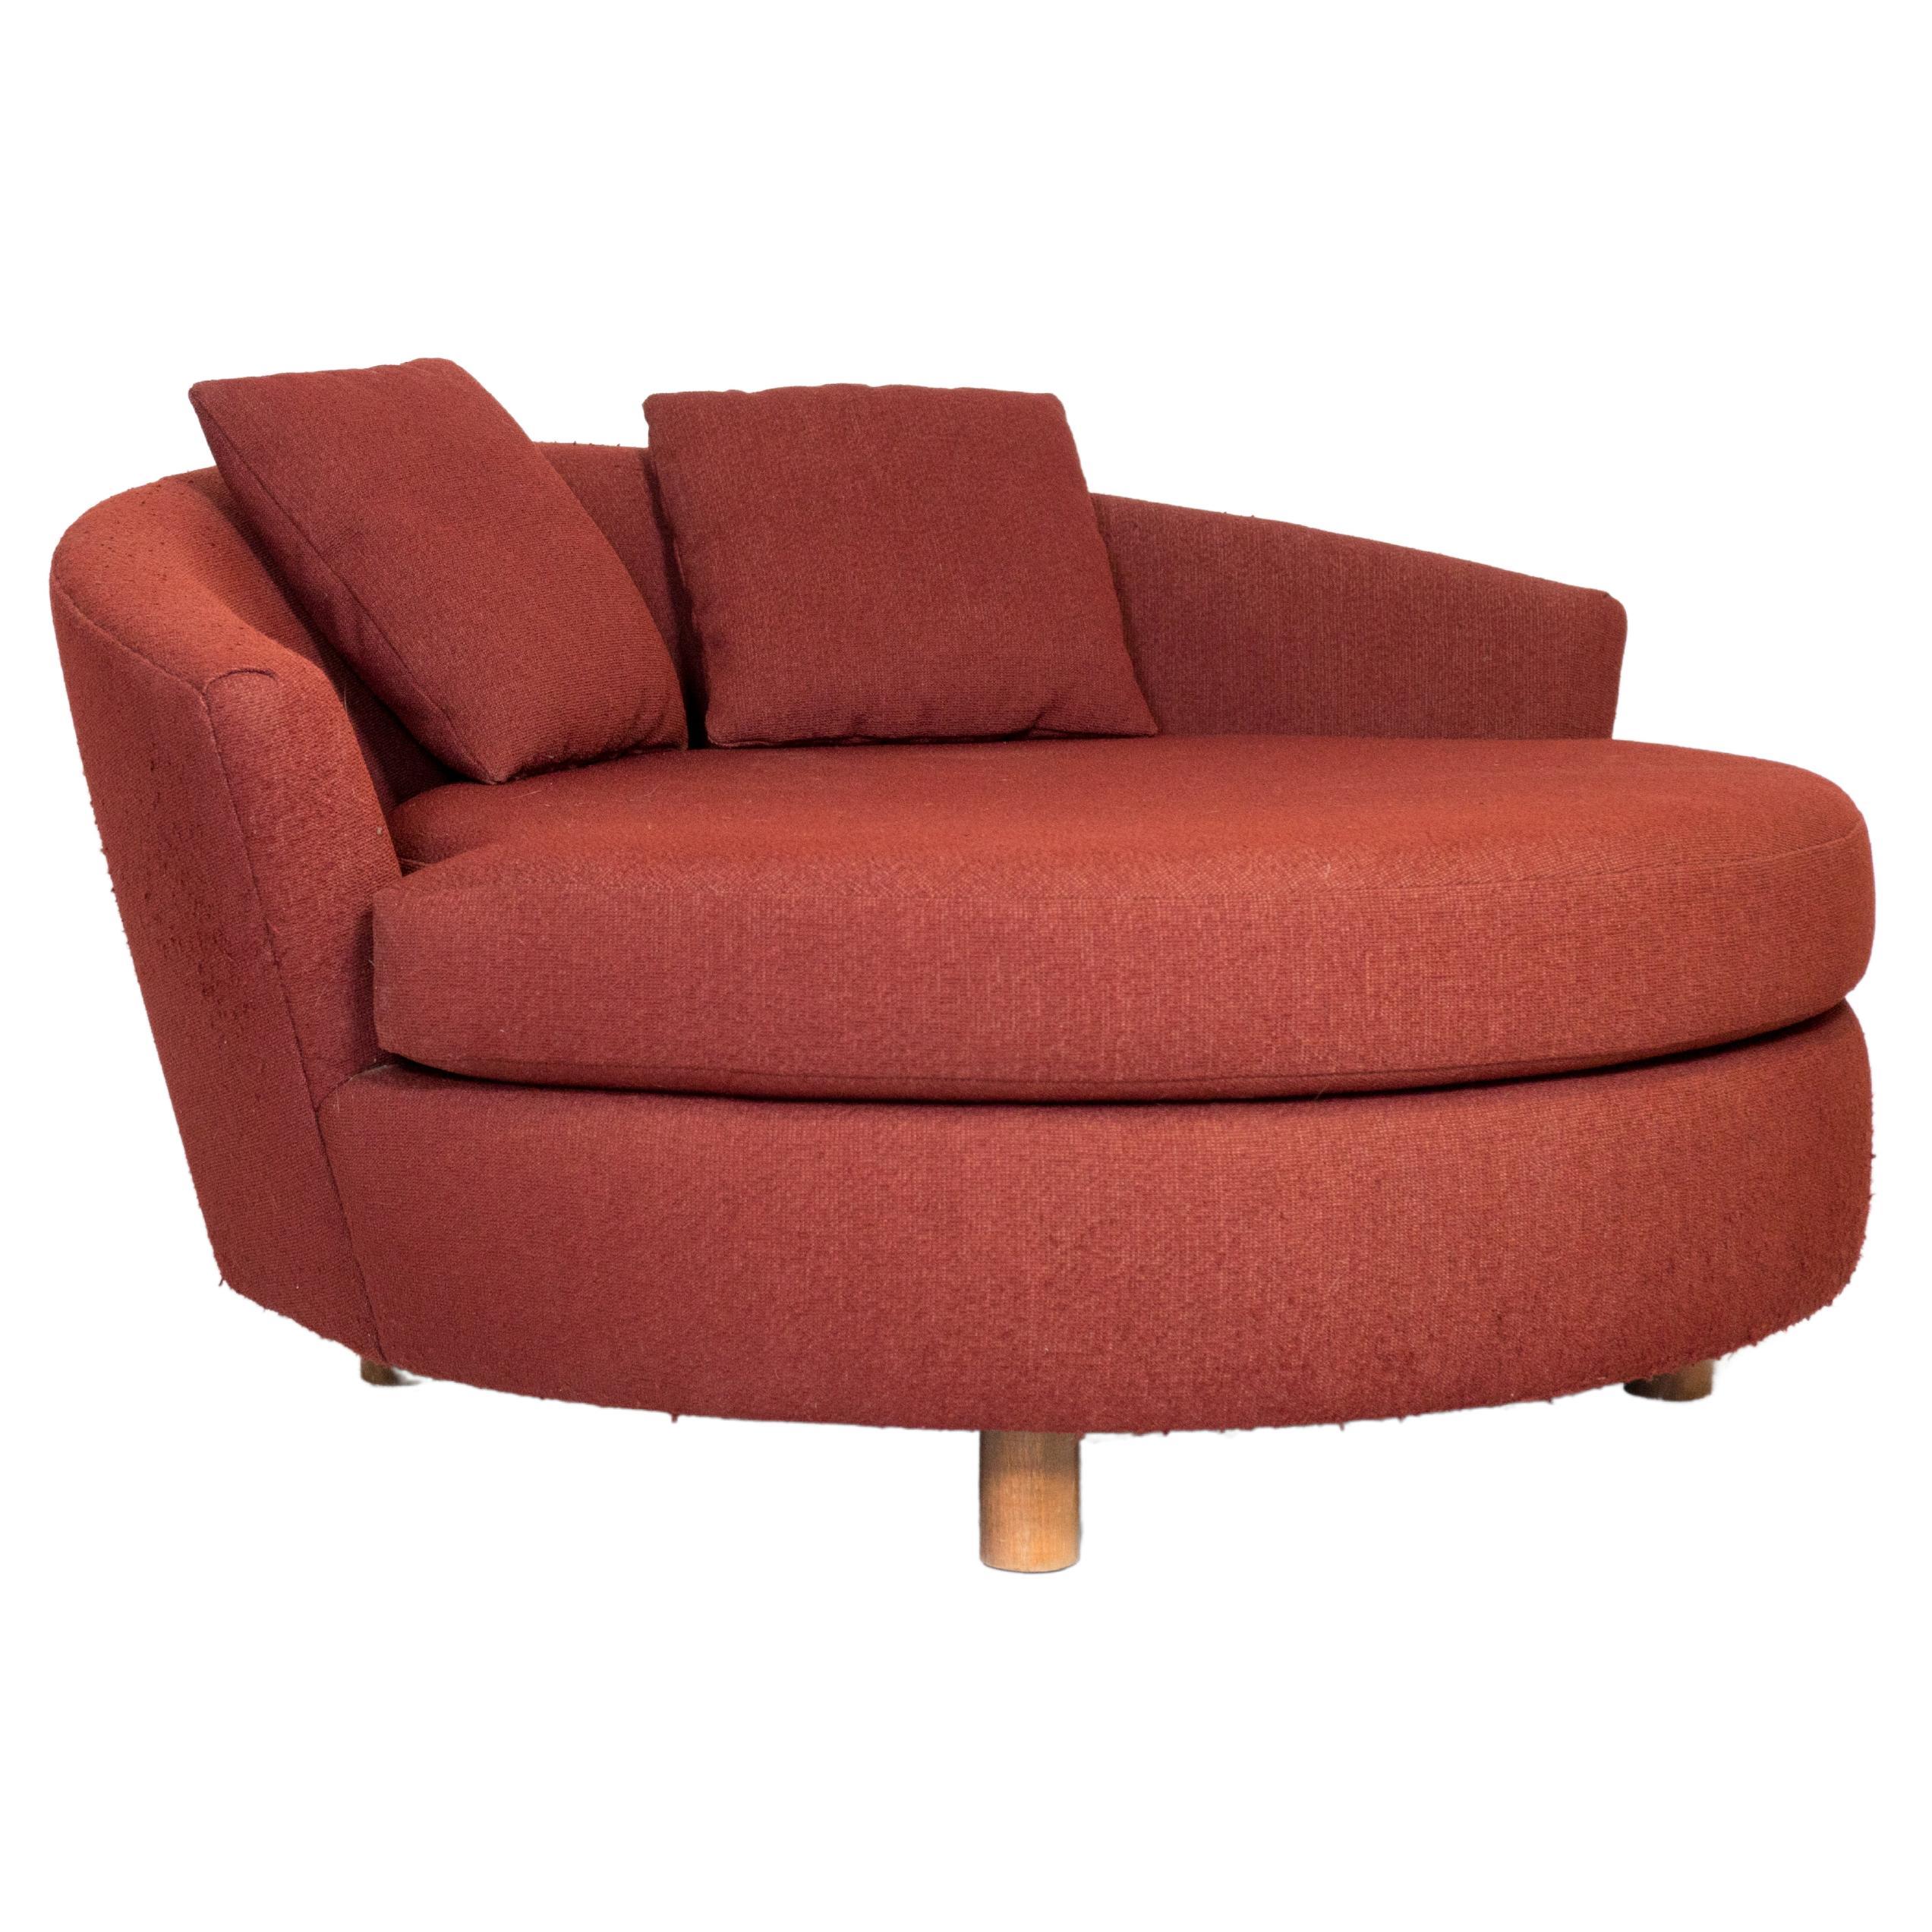 1970s Milo Baughman Style Satellite Petite Lounge Chair For Sale